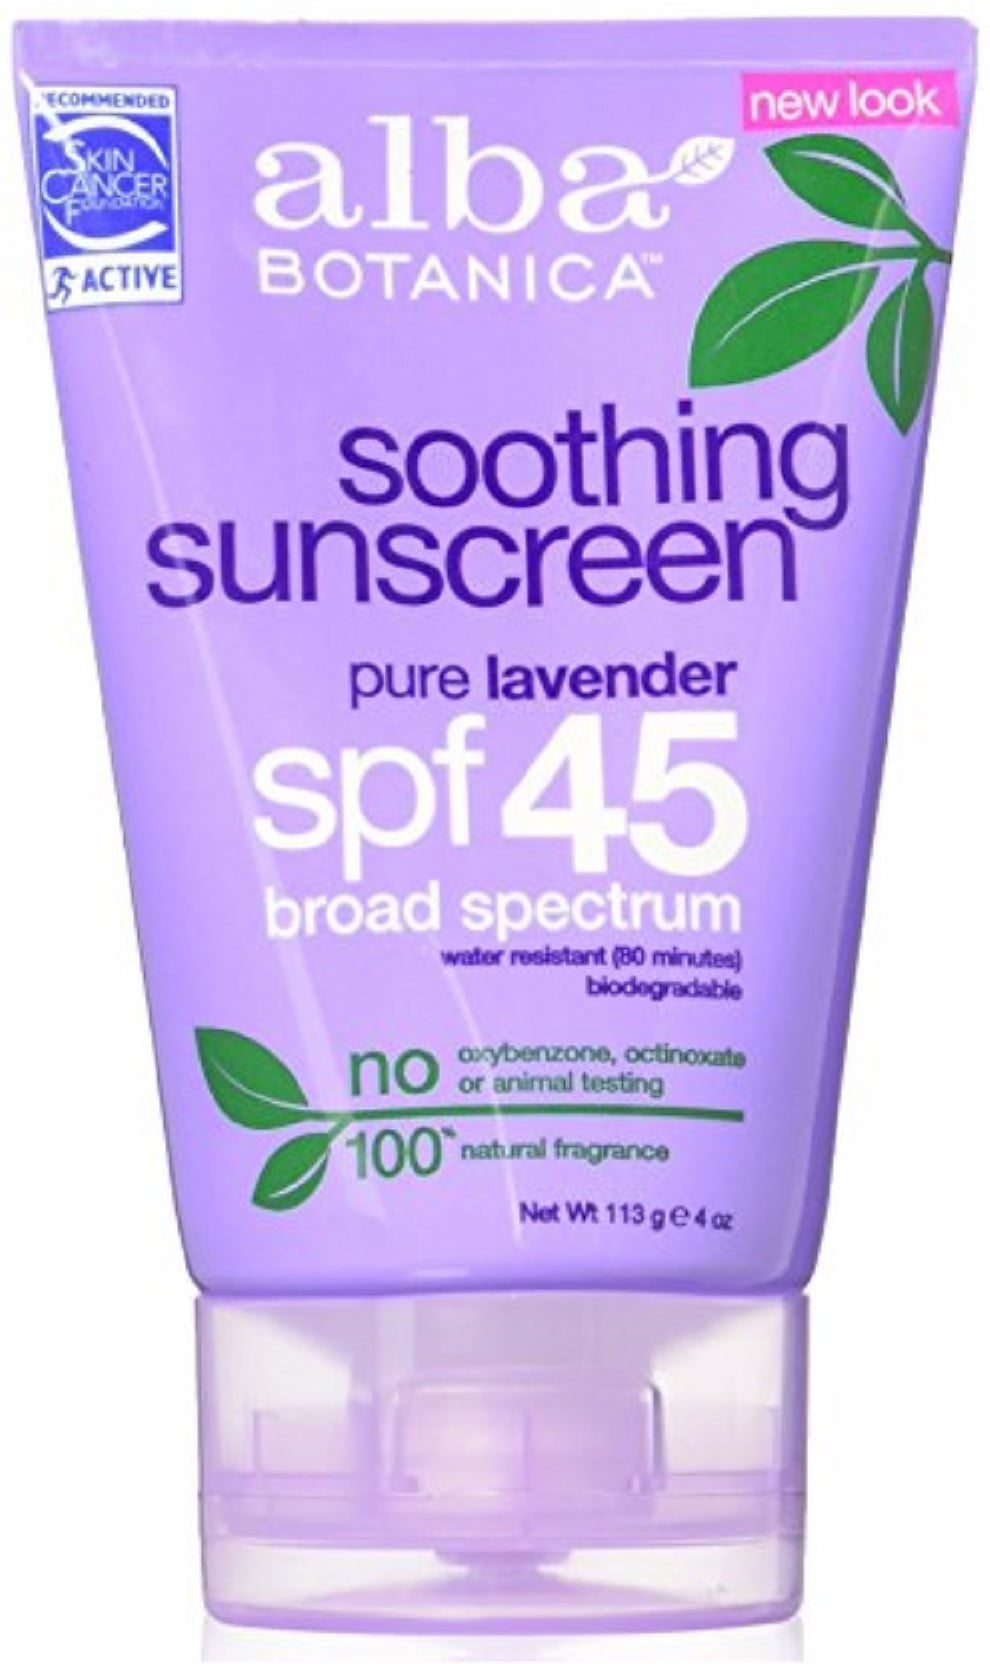 Alba Botanica Soothing Sunscreen, Pure Lavender SPF 45, 4oz - Walmart.com